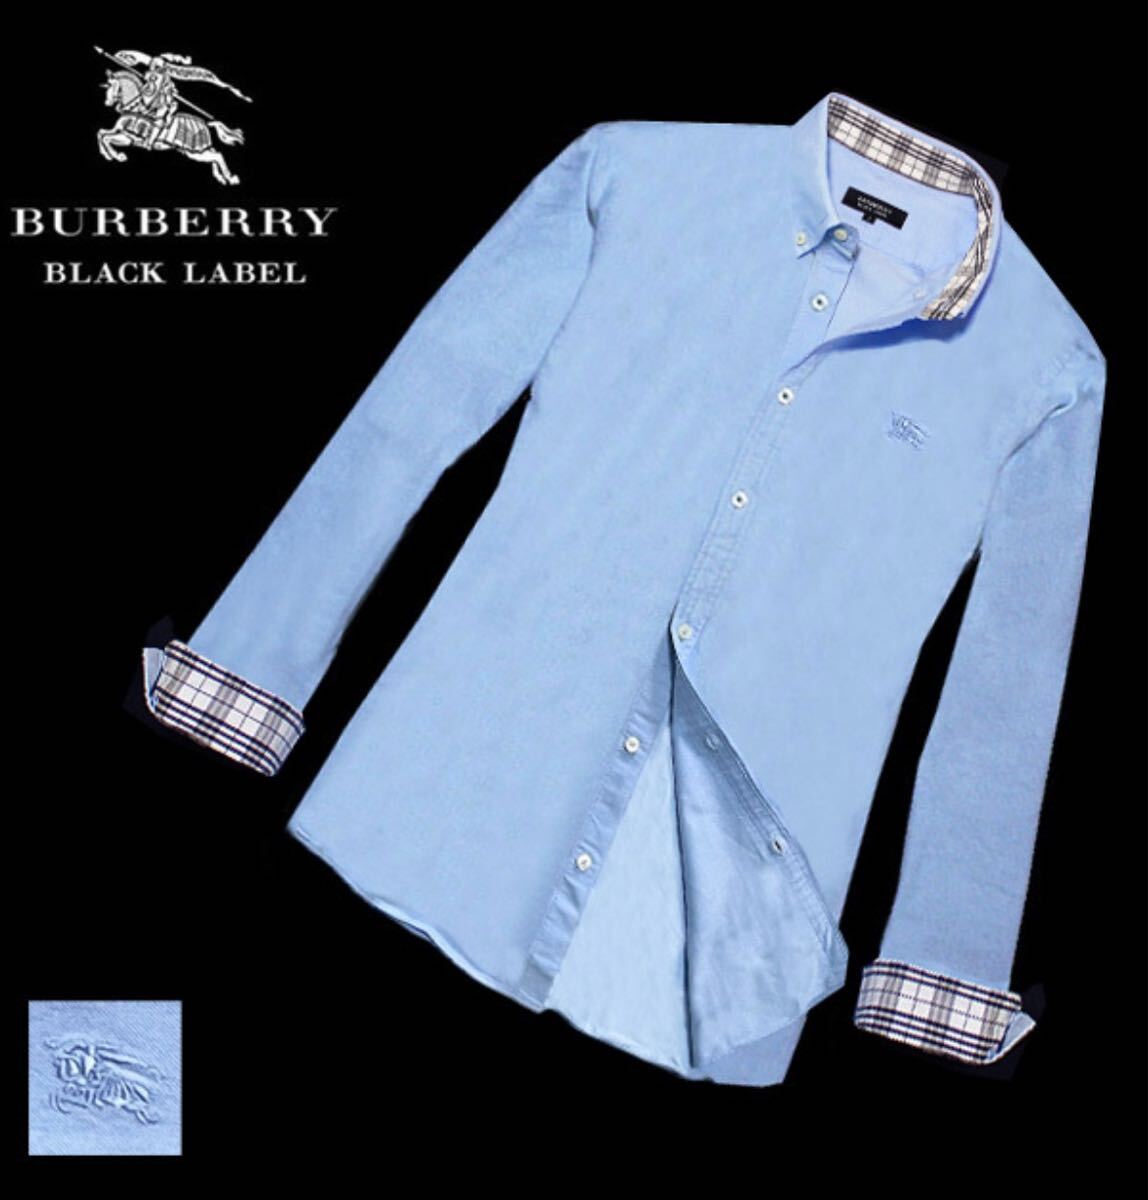  чистка settled!3(L) Burberry Black Label шланг вышивка ×noba проверка мужской оскфорд BD рубашка с длинным рукавом #BURBERRY BLACK LABEL